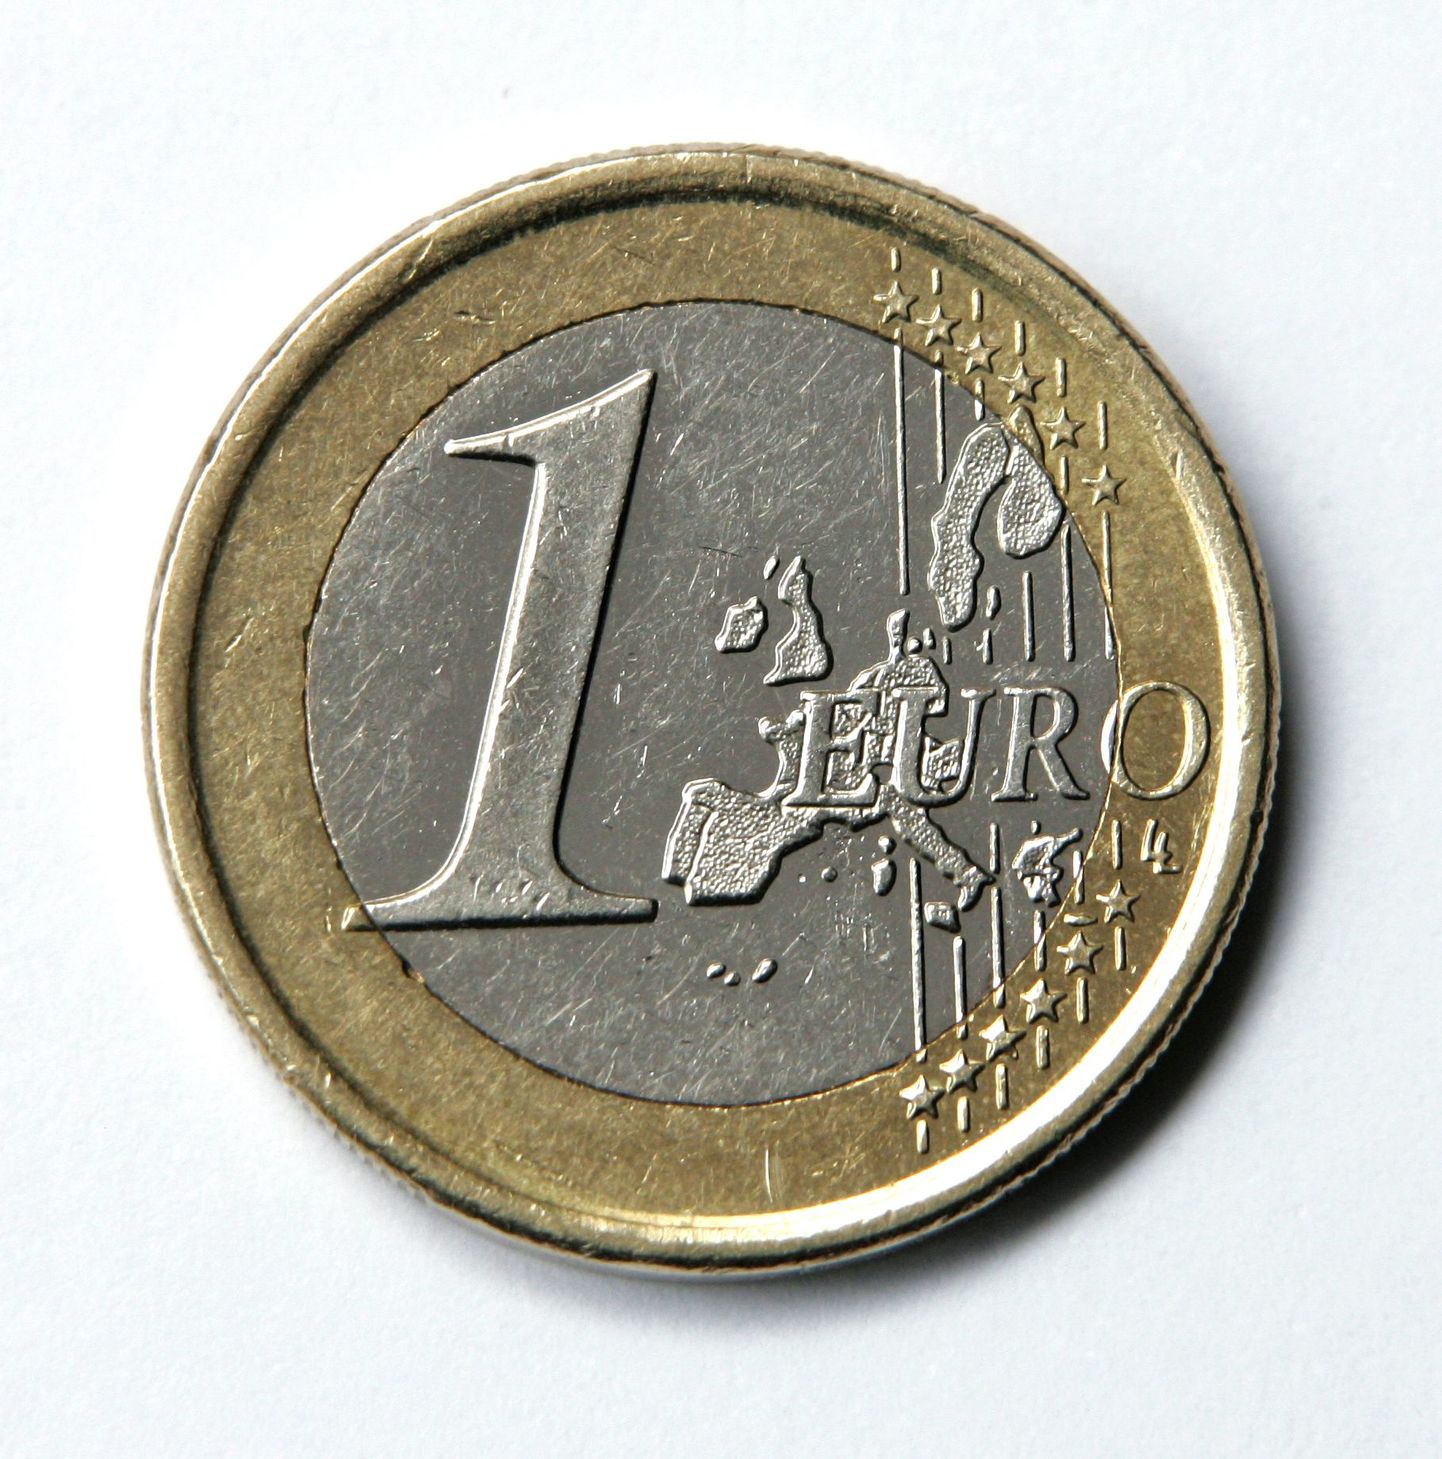 Pittu minnes tasuks euro taskusse pista.